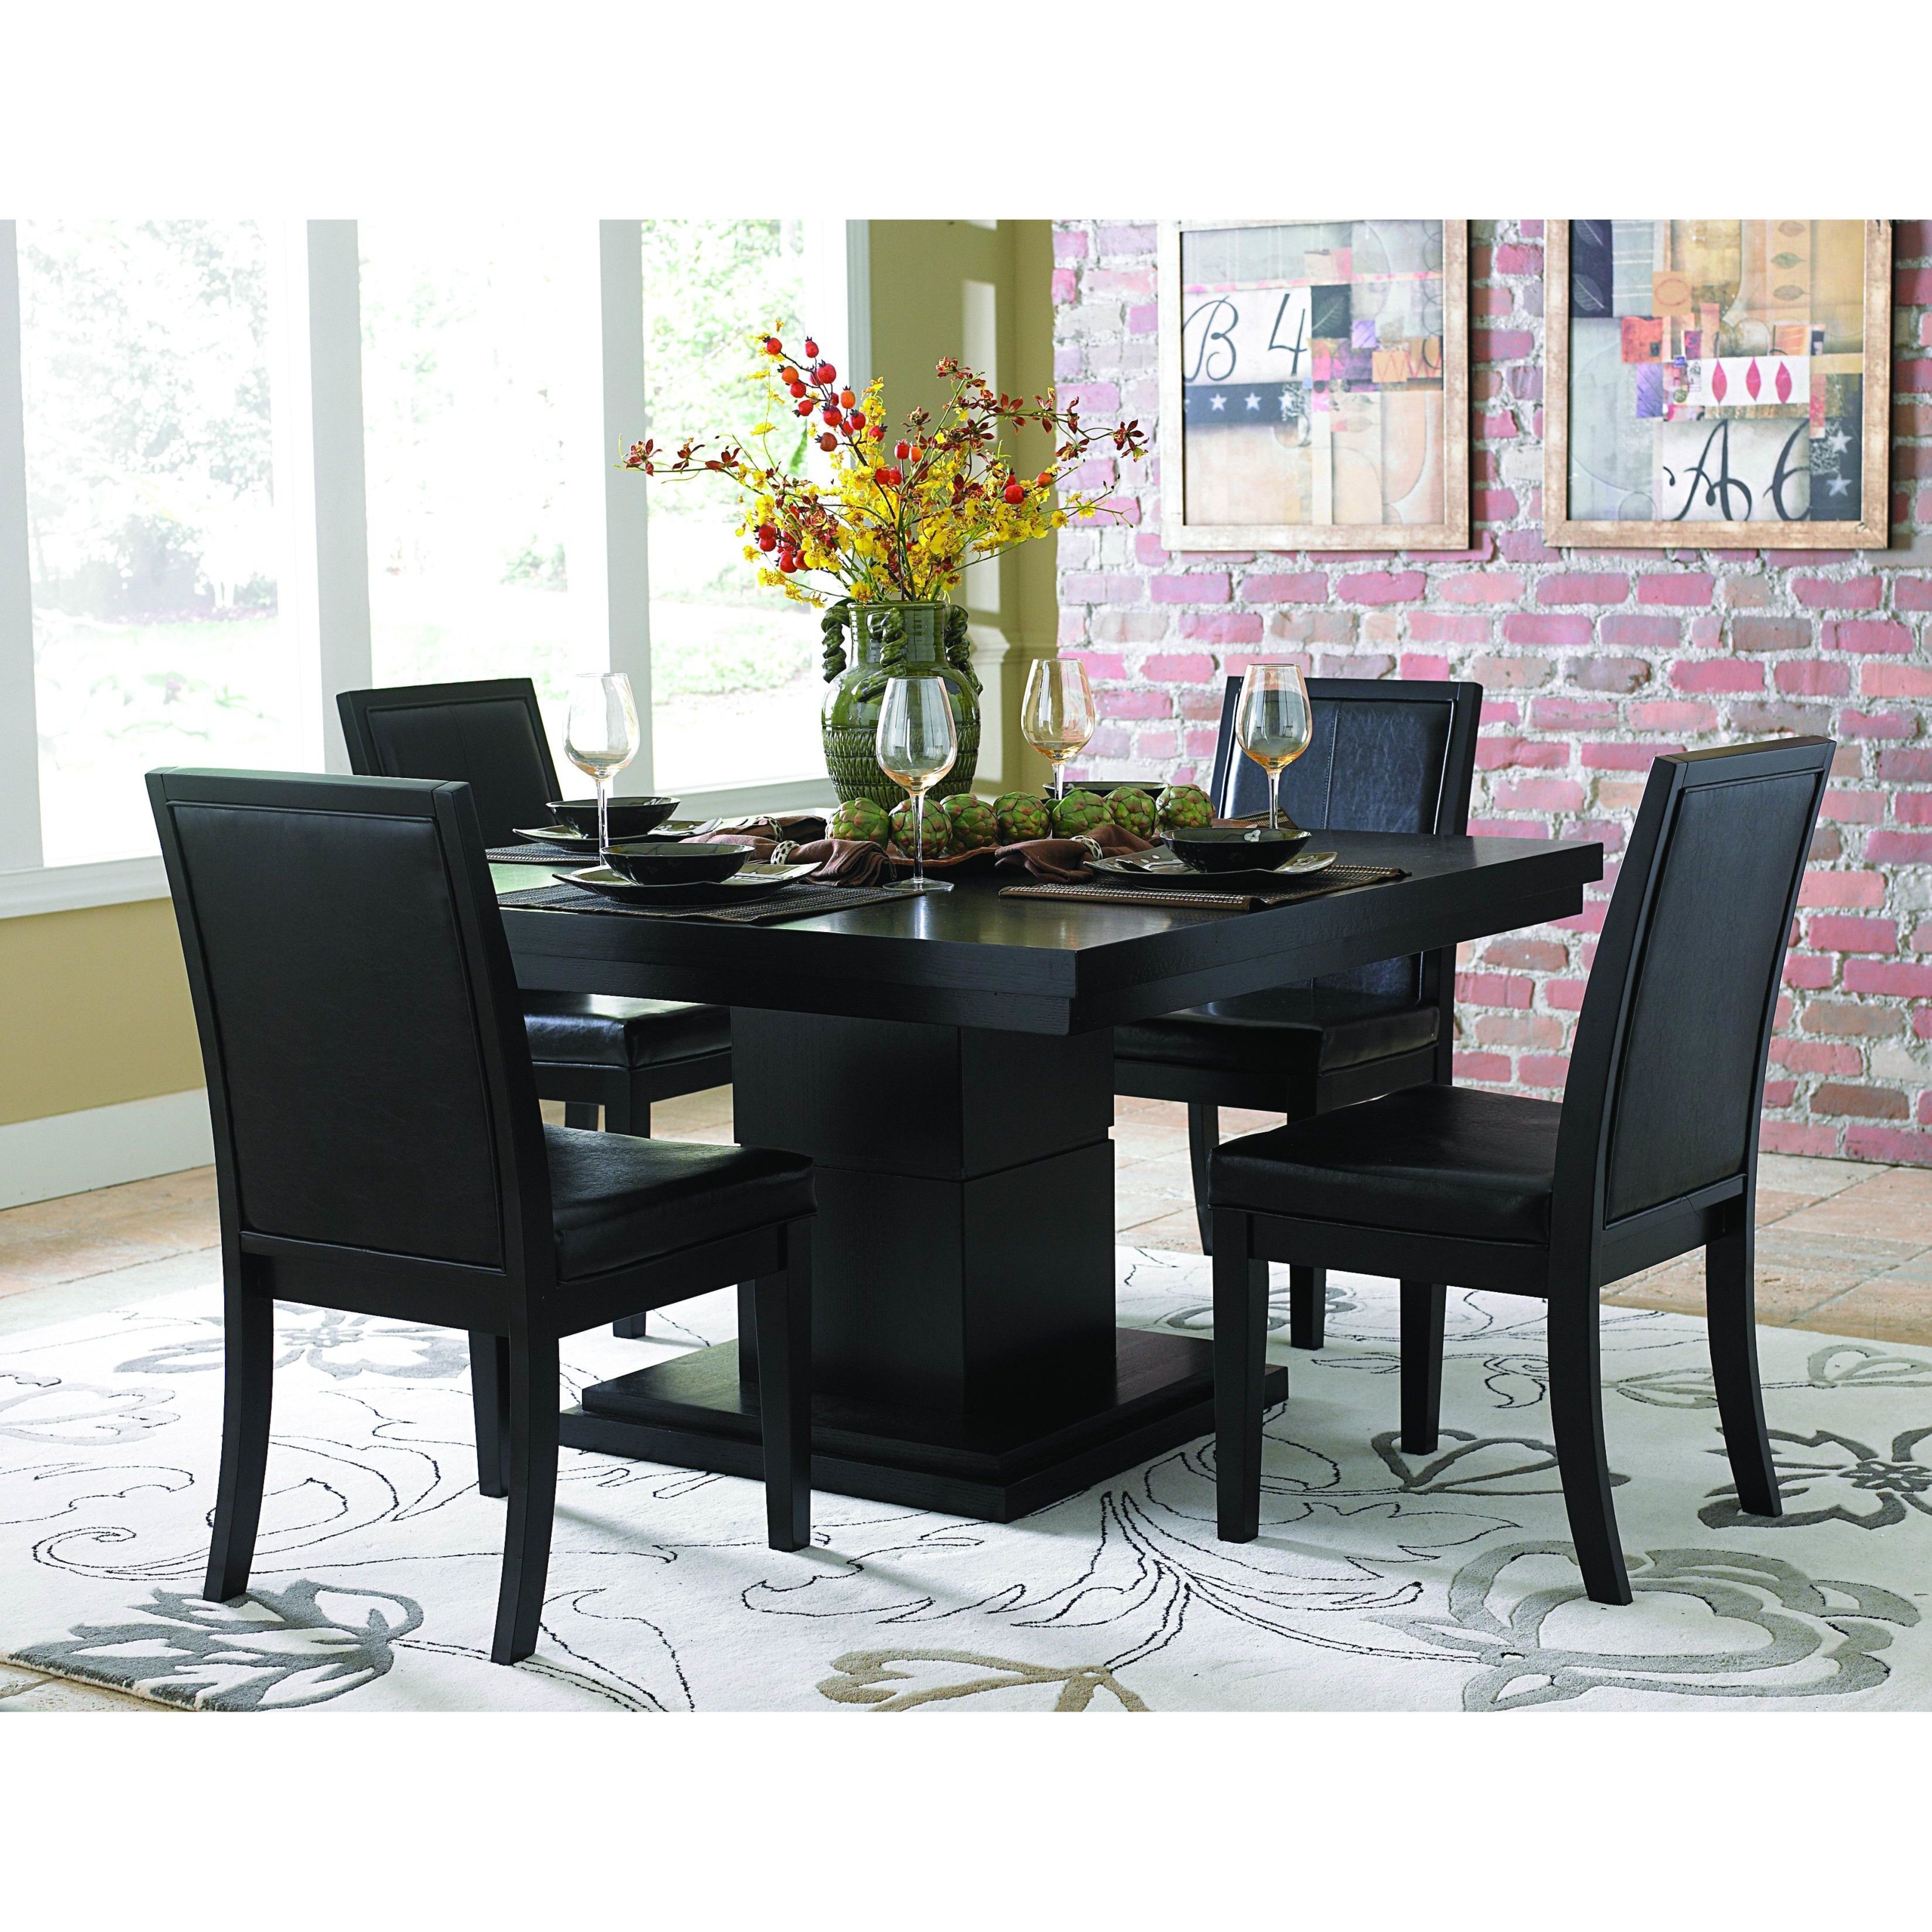 Weston black square pedestal dining table